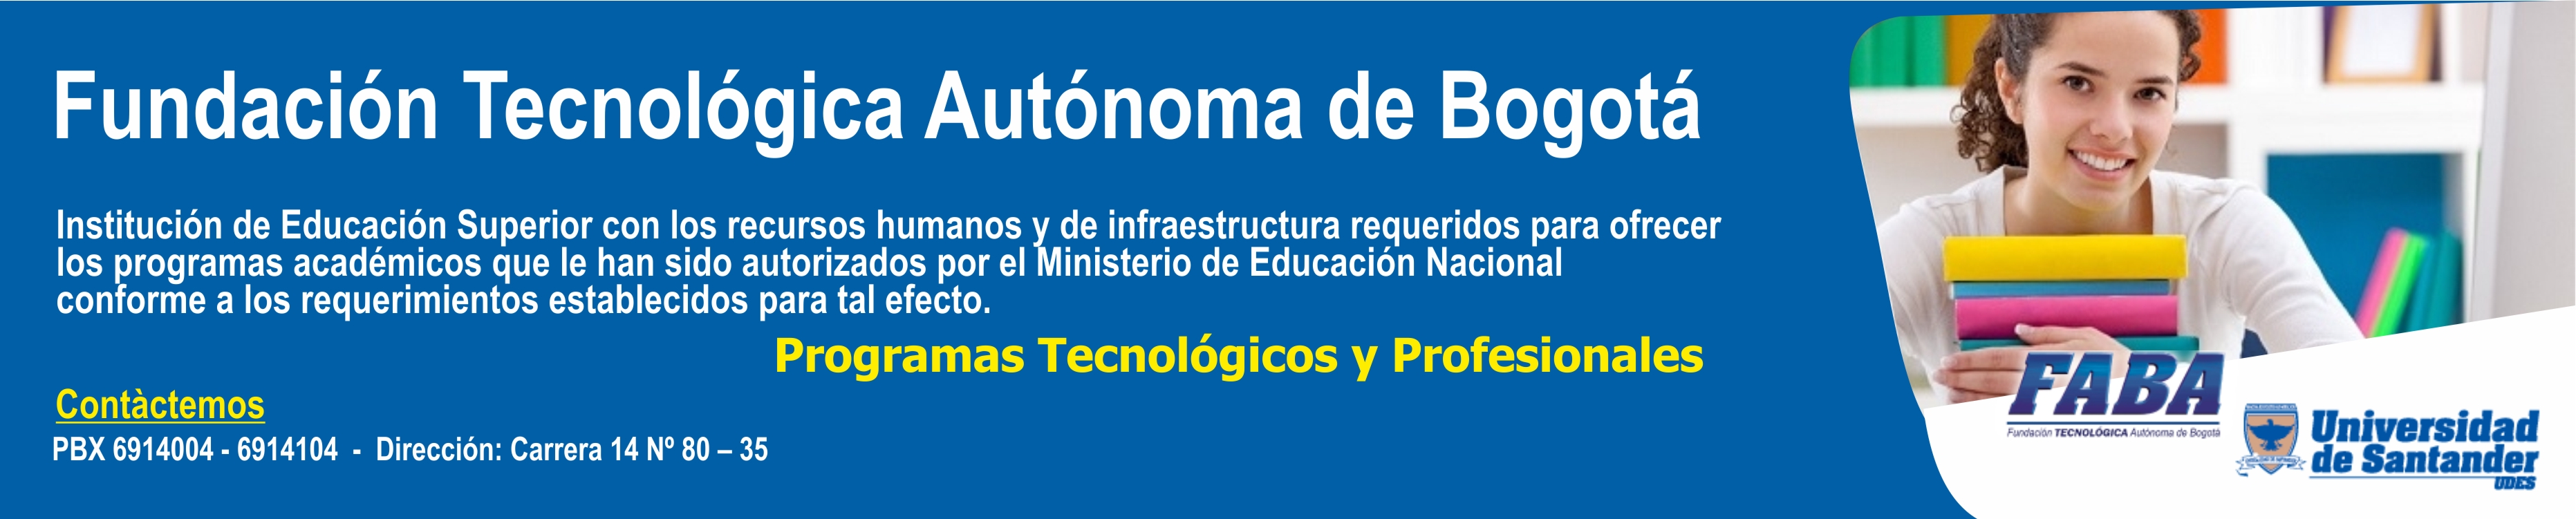 tl_files/banners universidades/autonoma de bogota.jpg